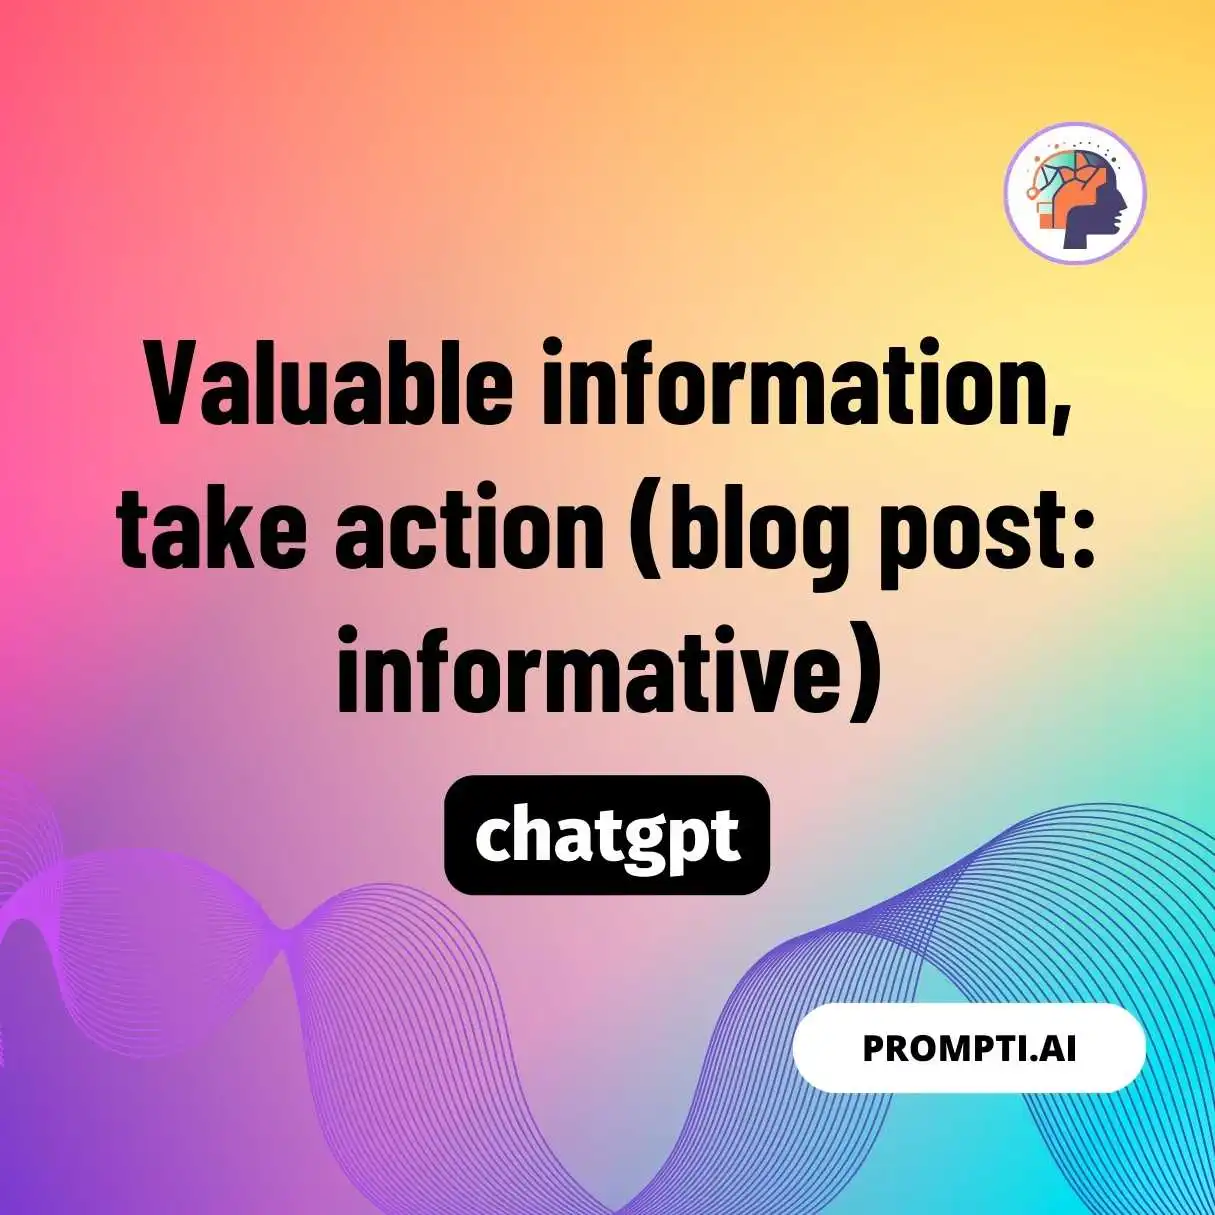 Valuable information, take action (blog post: informative)